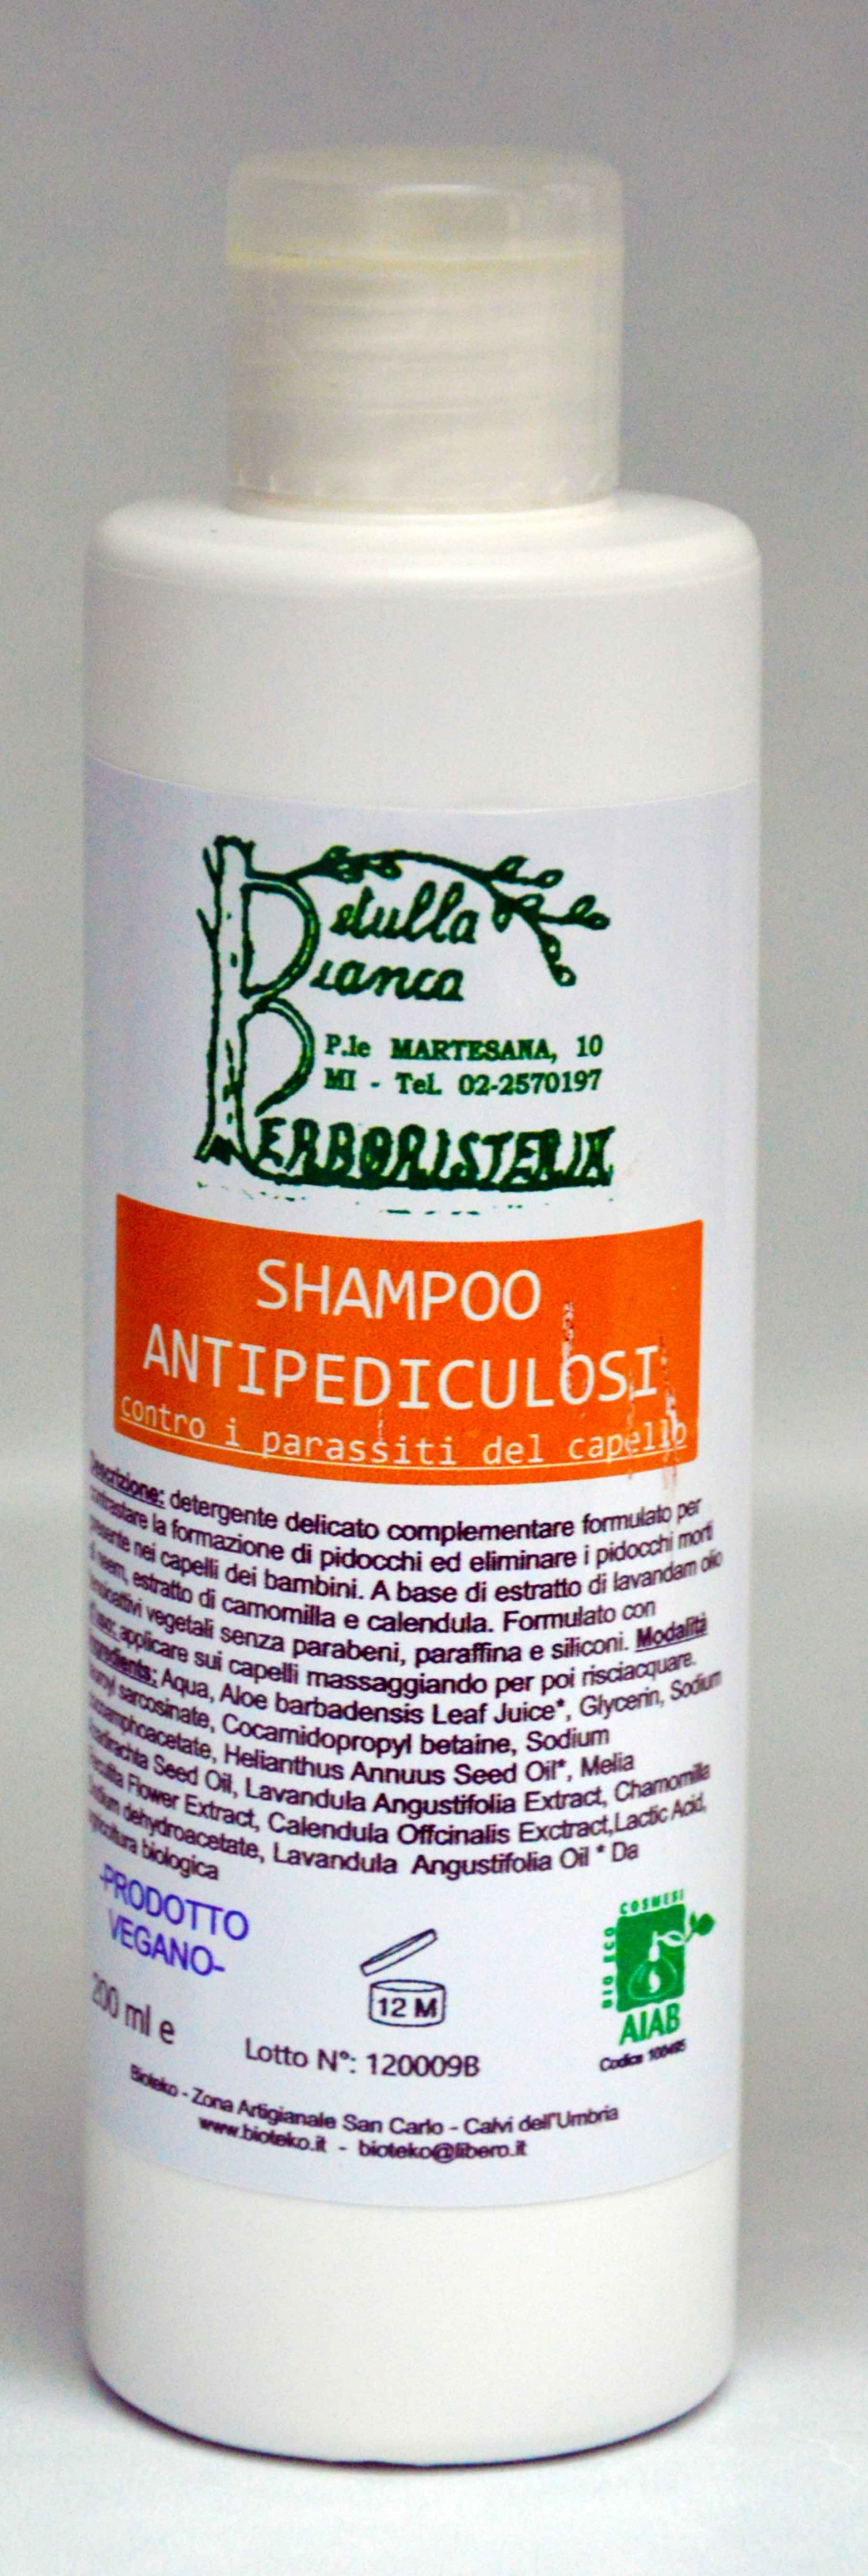 Shampoo antipediculosi